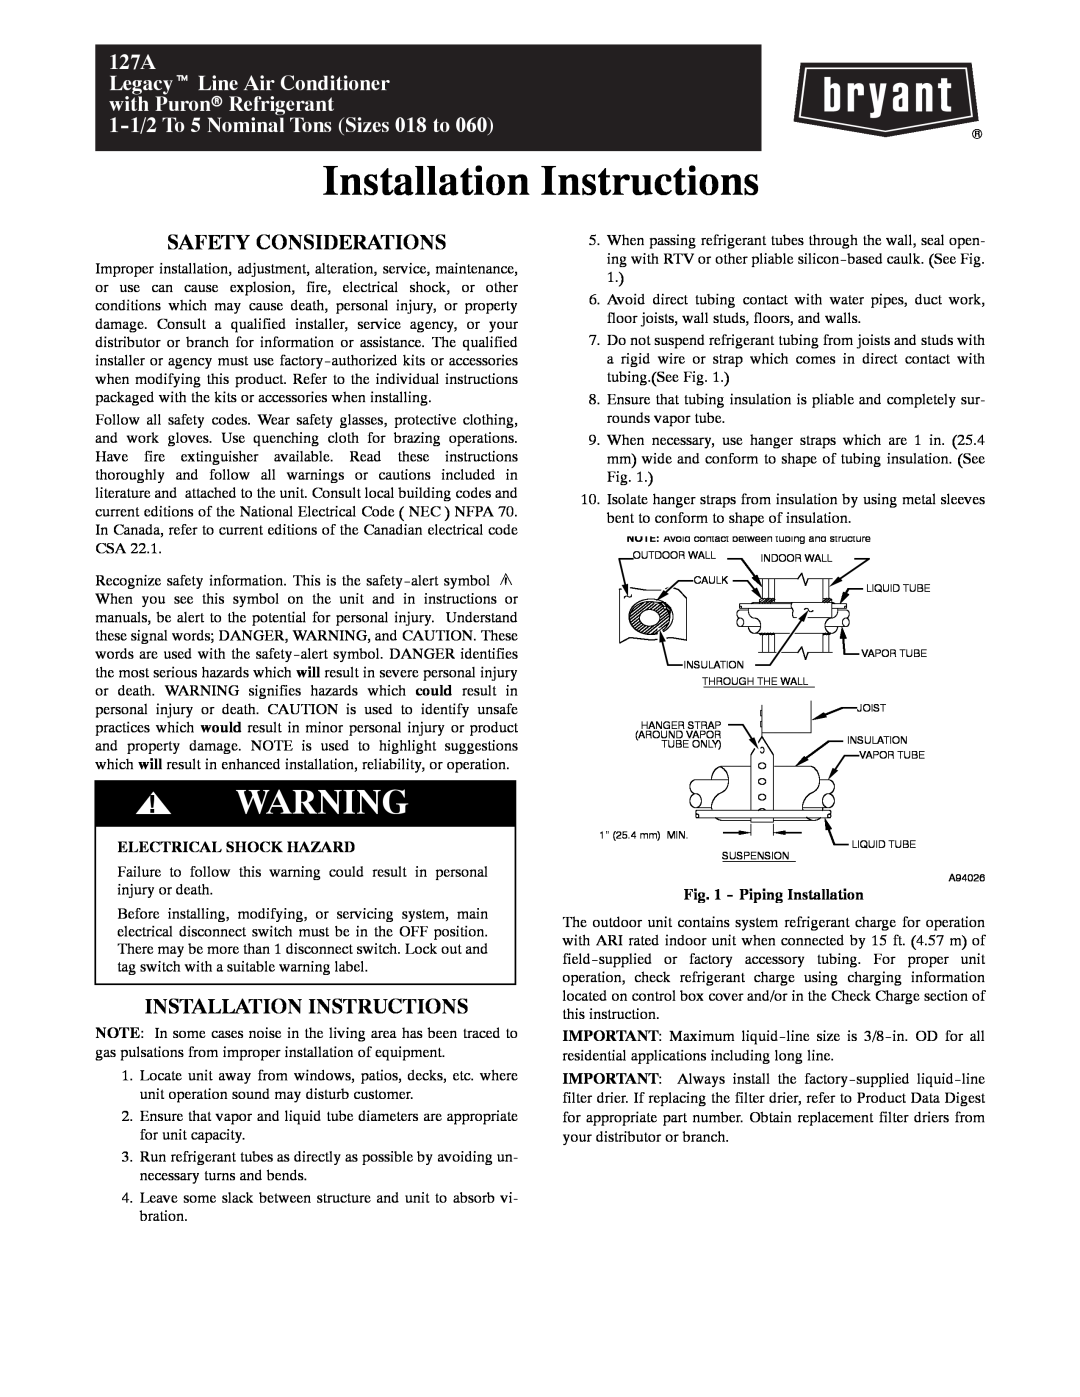 Bryant 127A installation instructions Safety Considerations, Installation Instructions, Electrical Shock Hazard 